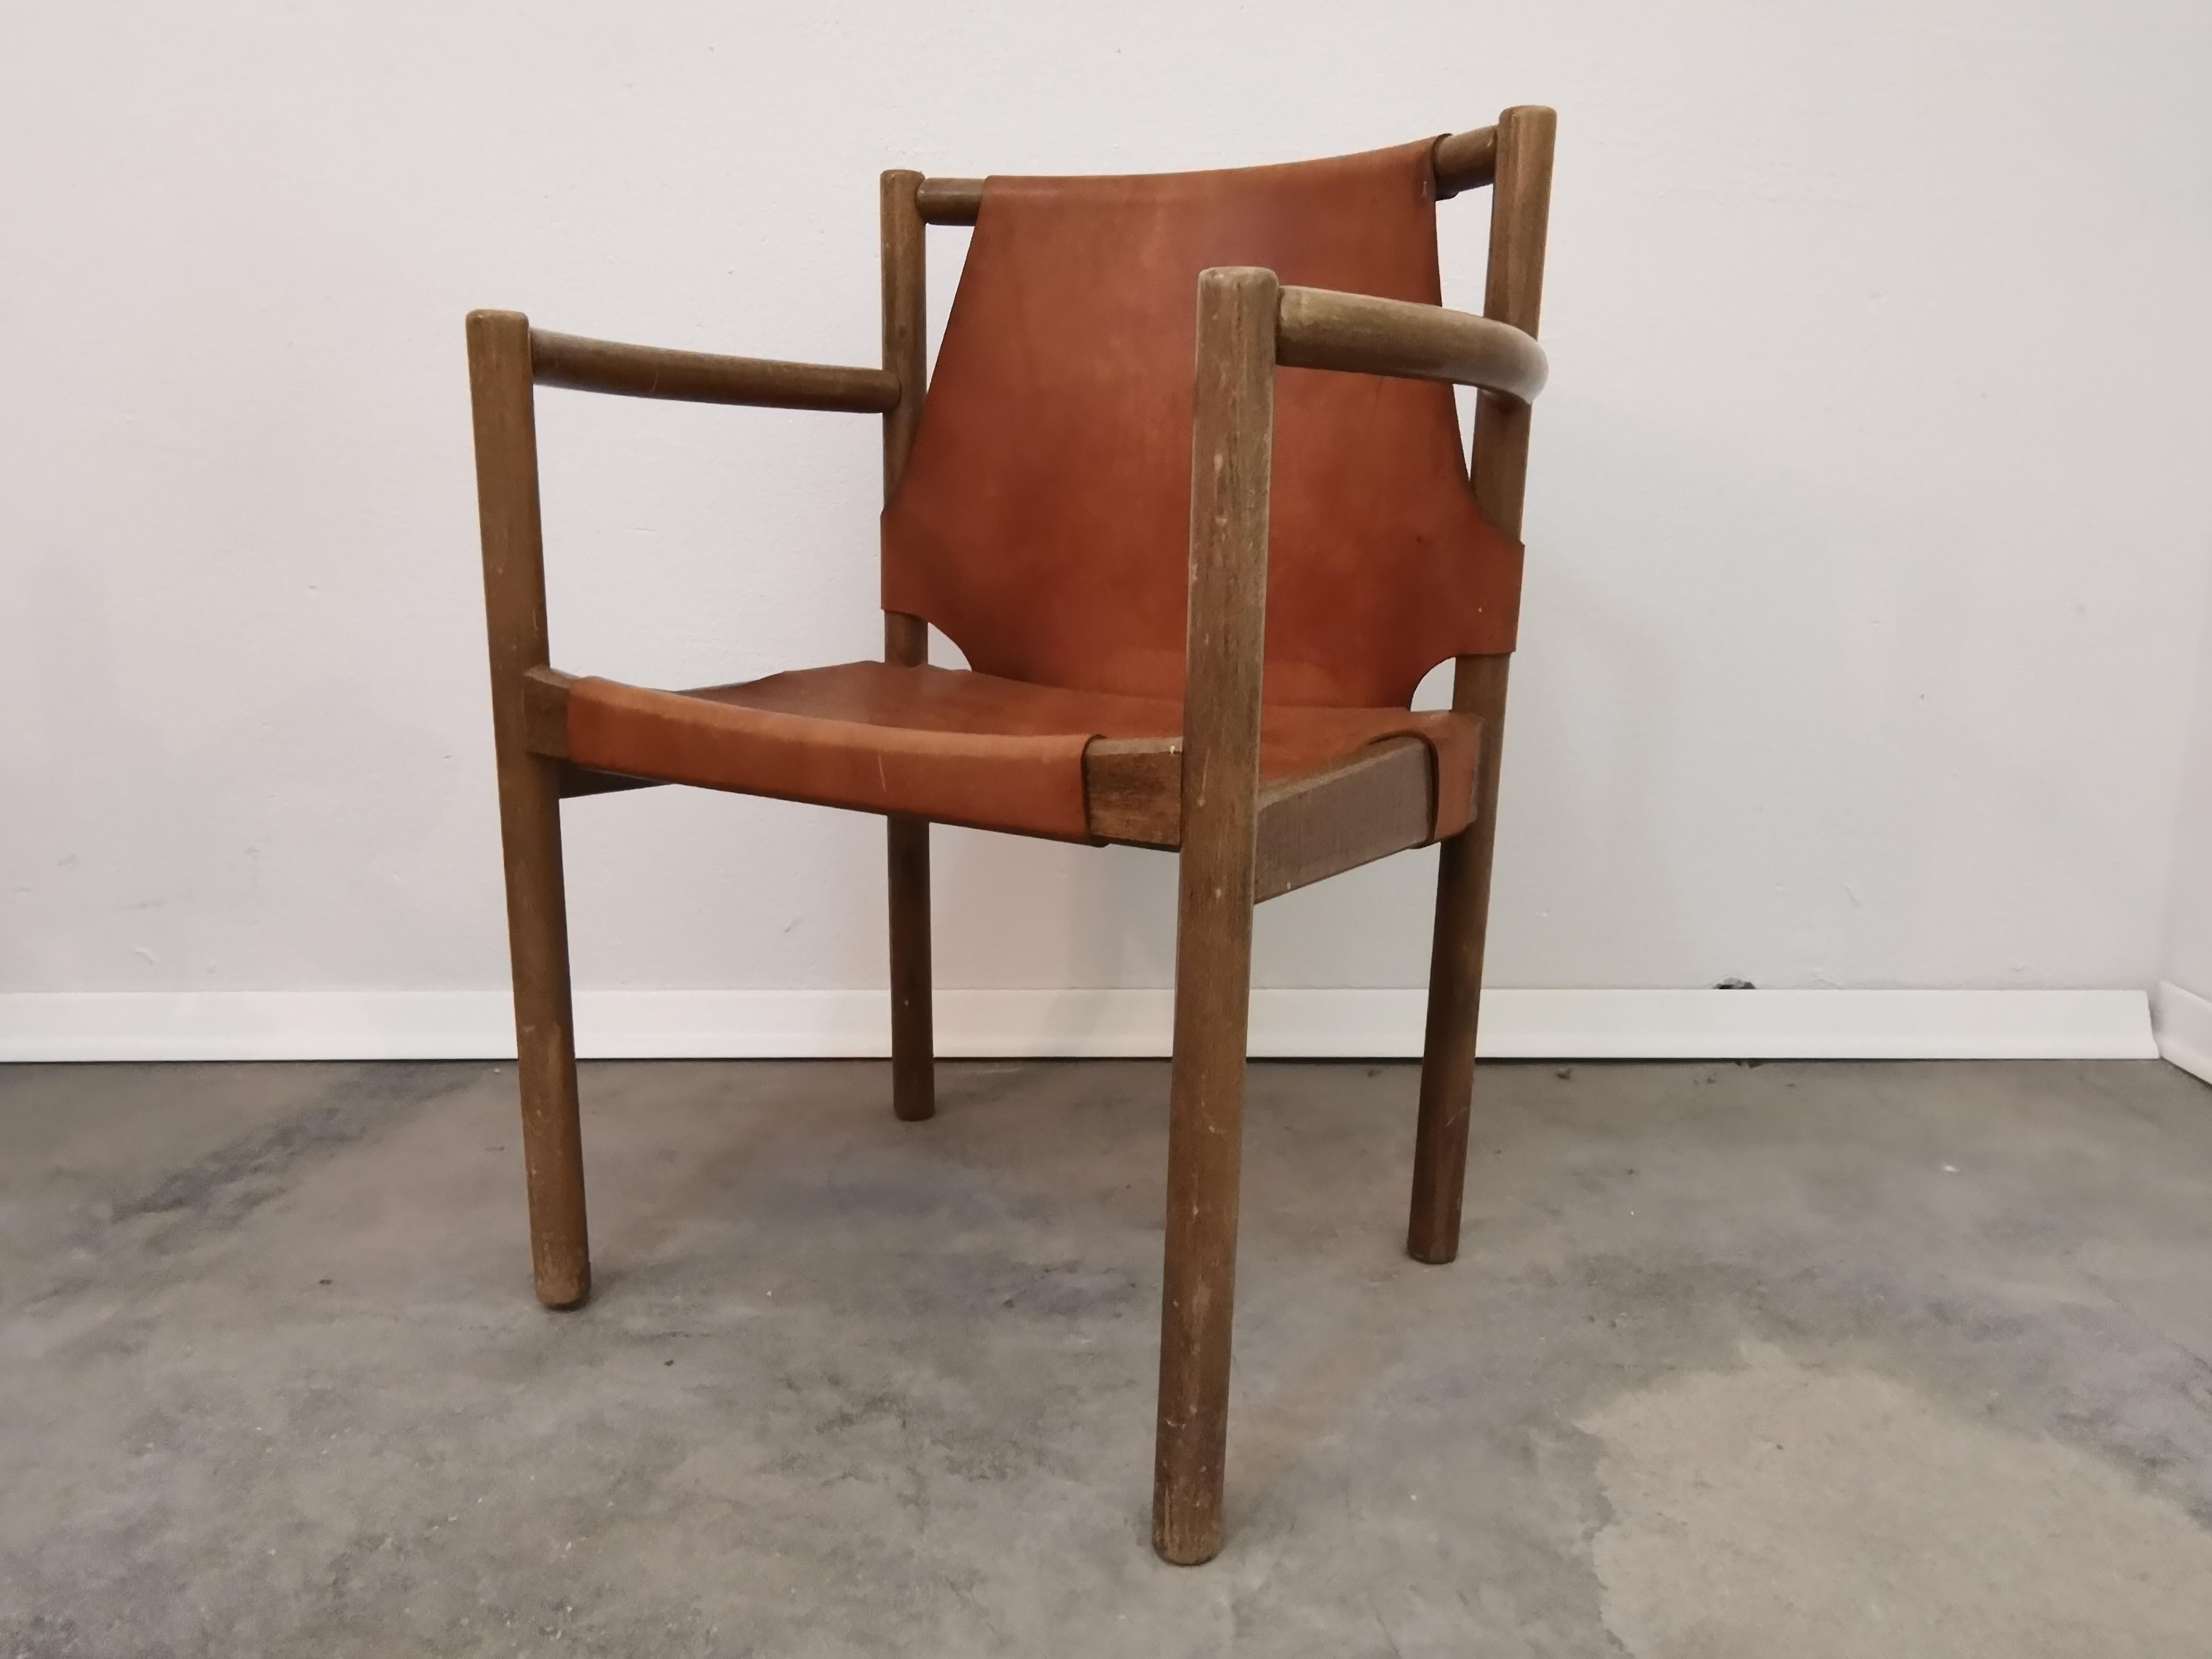 Vintage-Stuhl mit Ledersitz
Zeitraum der Produktion: 1960s
Stil: Vintage, klassisches Design, Moderne Mitte des Jahrhunderts
Materialien: Holz, Leder
Farbe: braun.